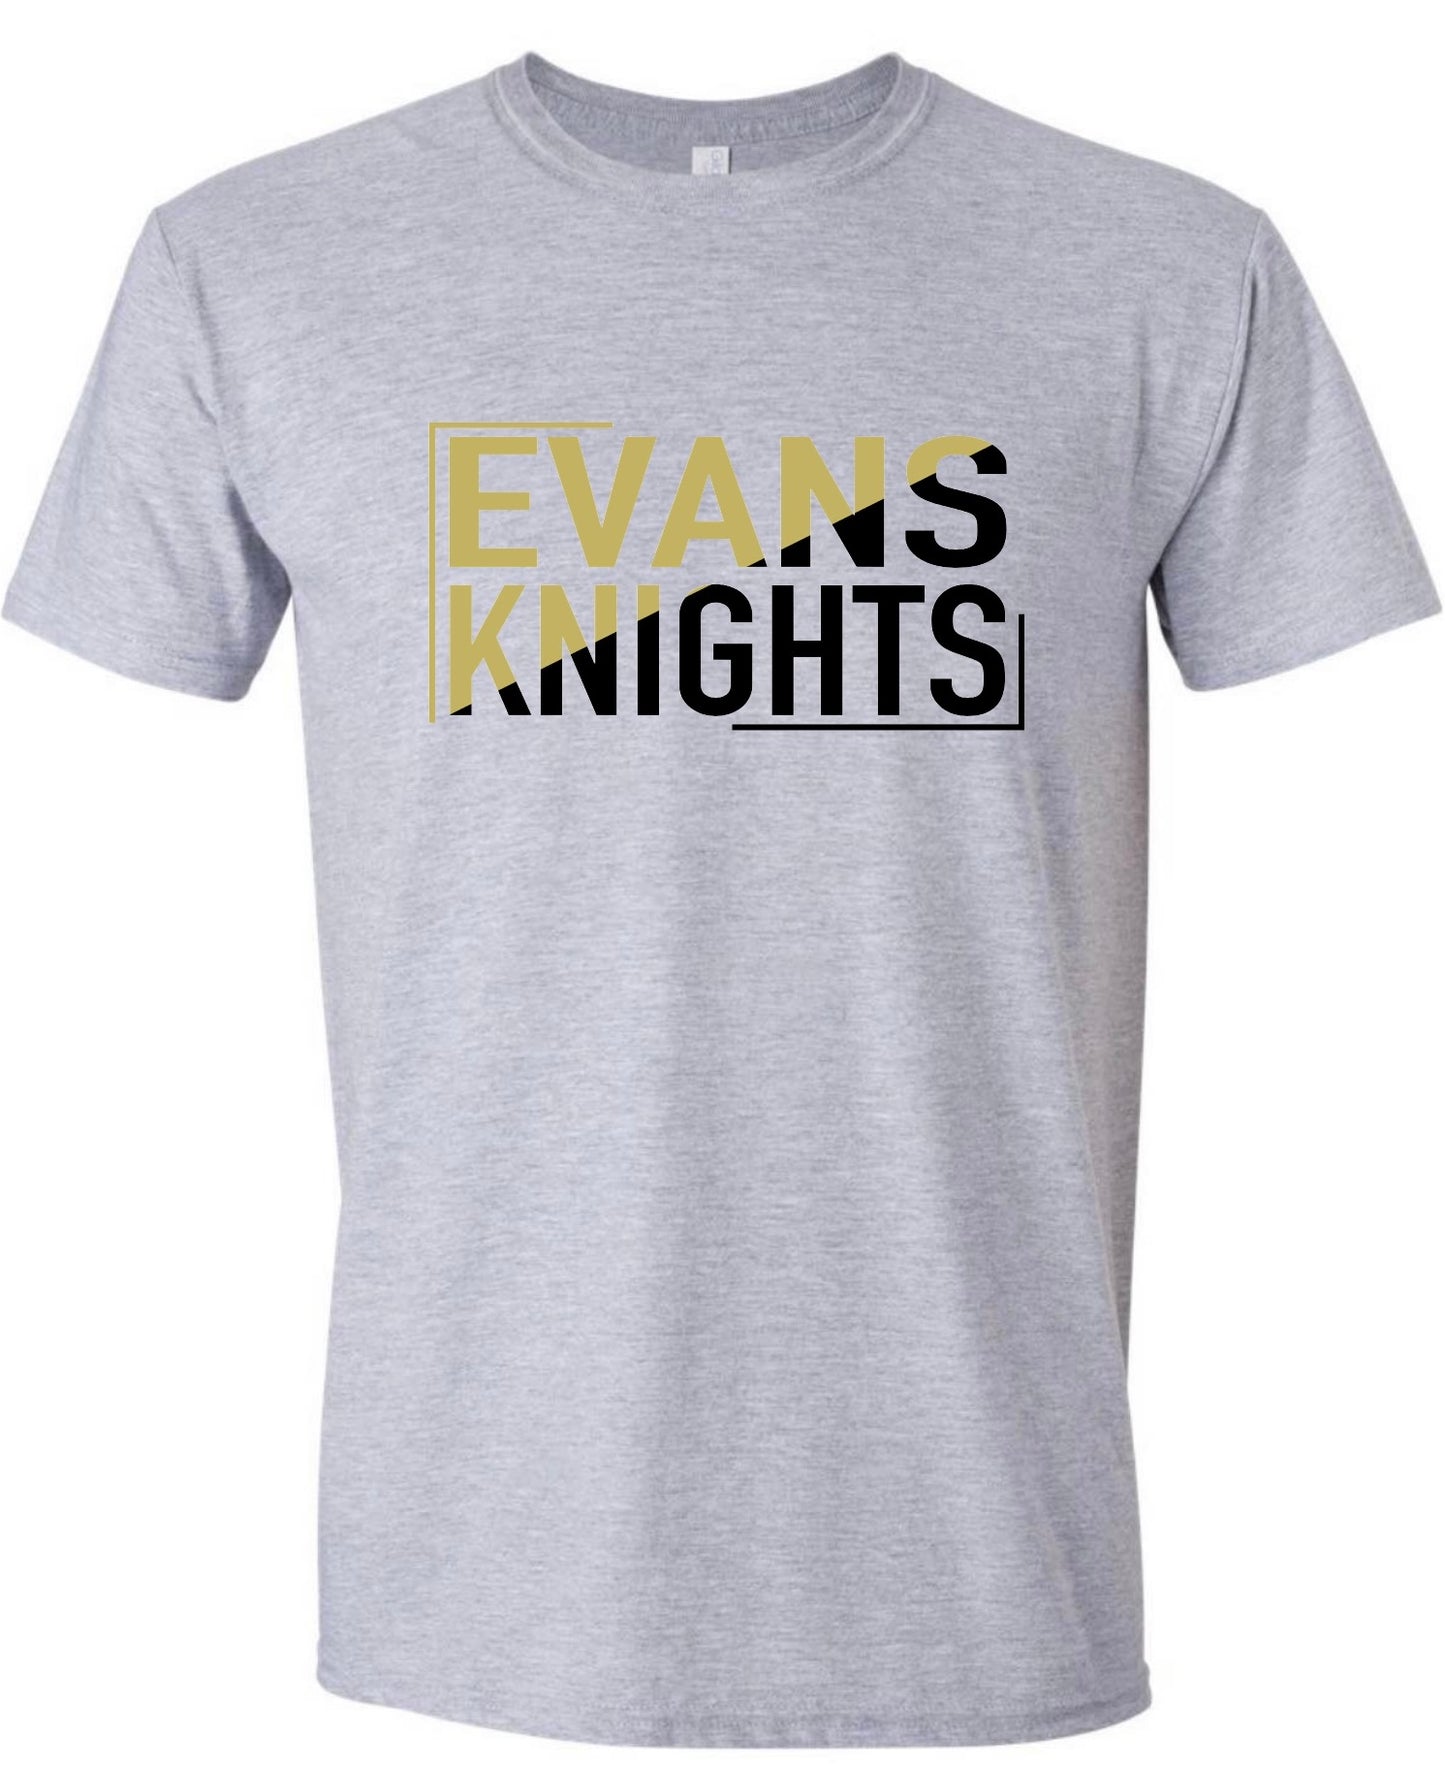 Evans Knights Split Color Tshirt